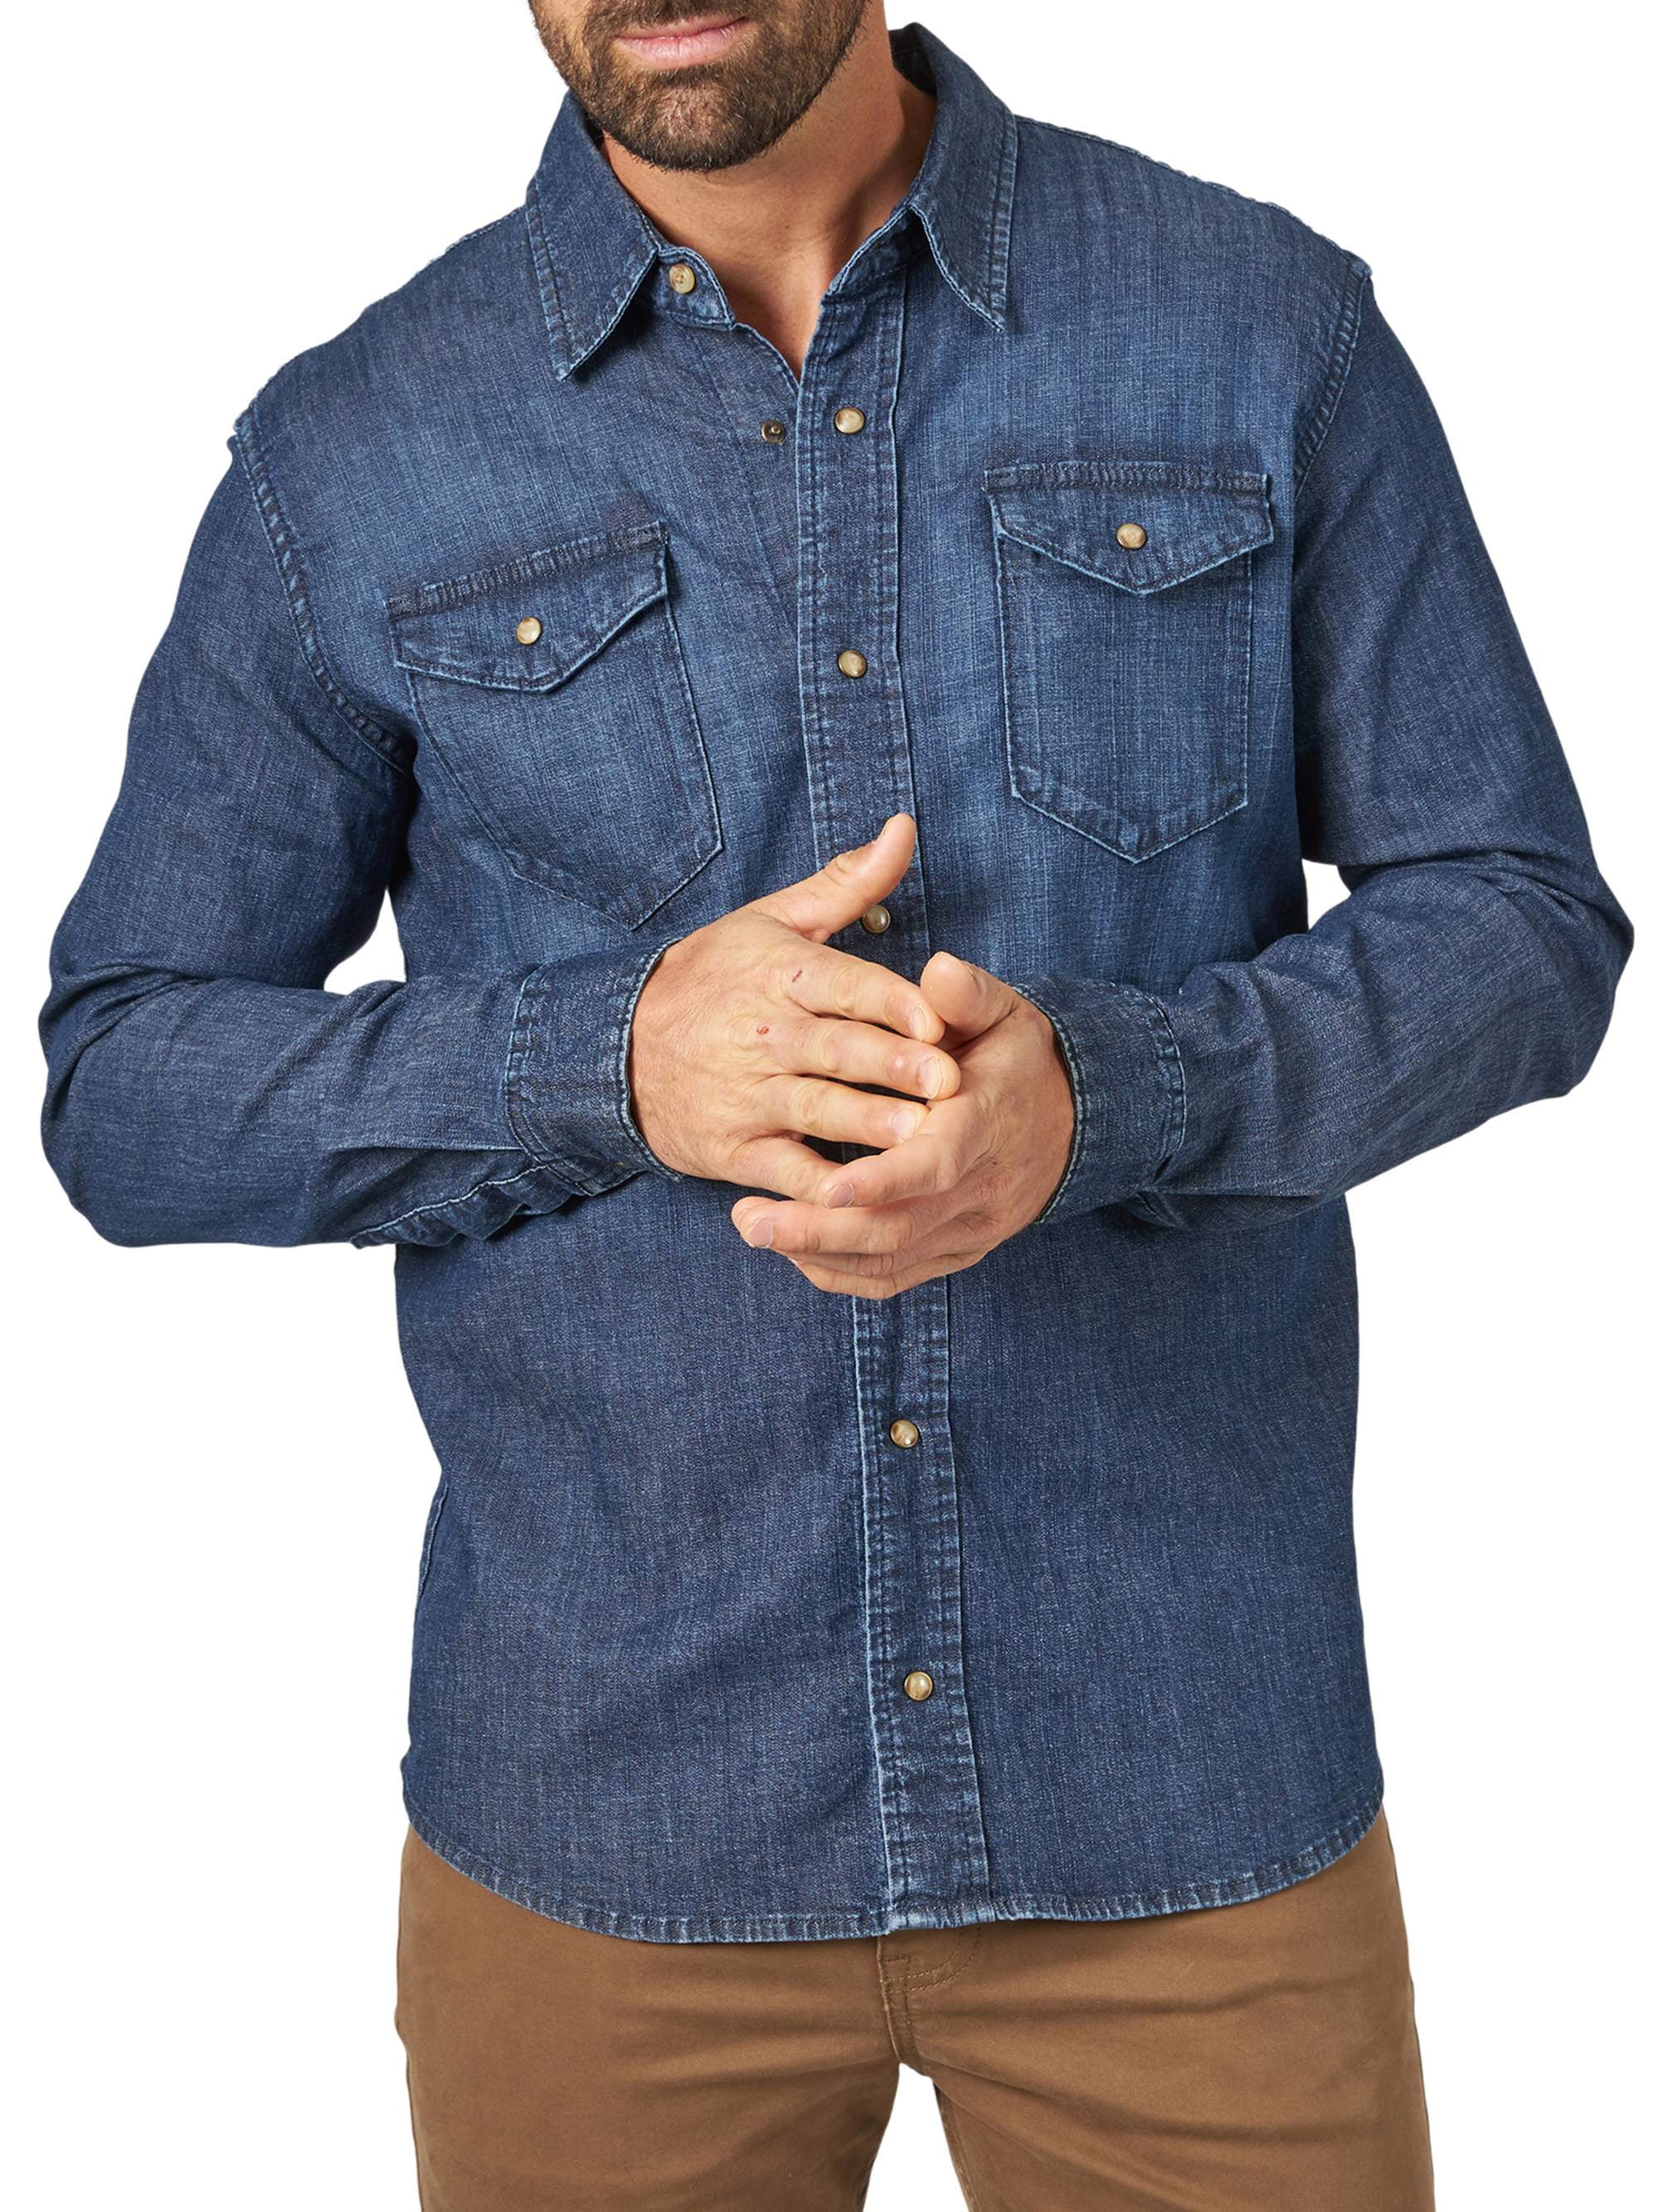 wrangler blue jean shirts